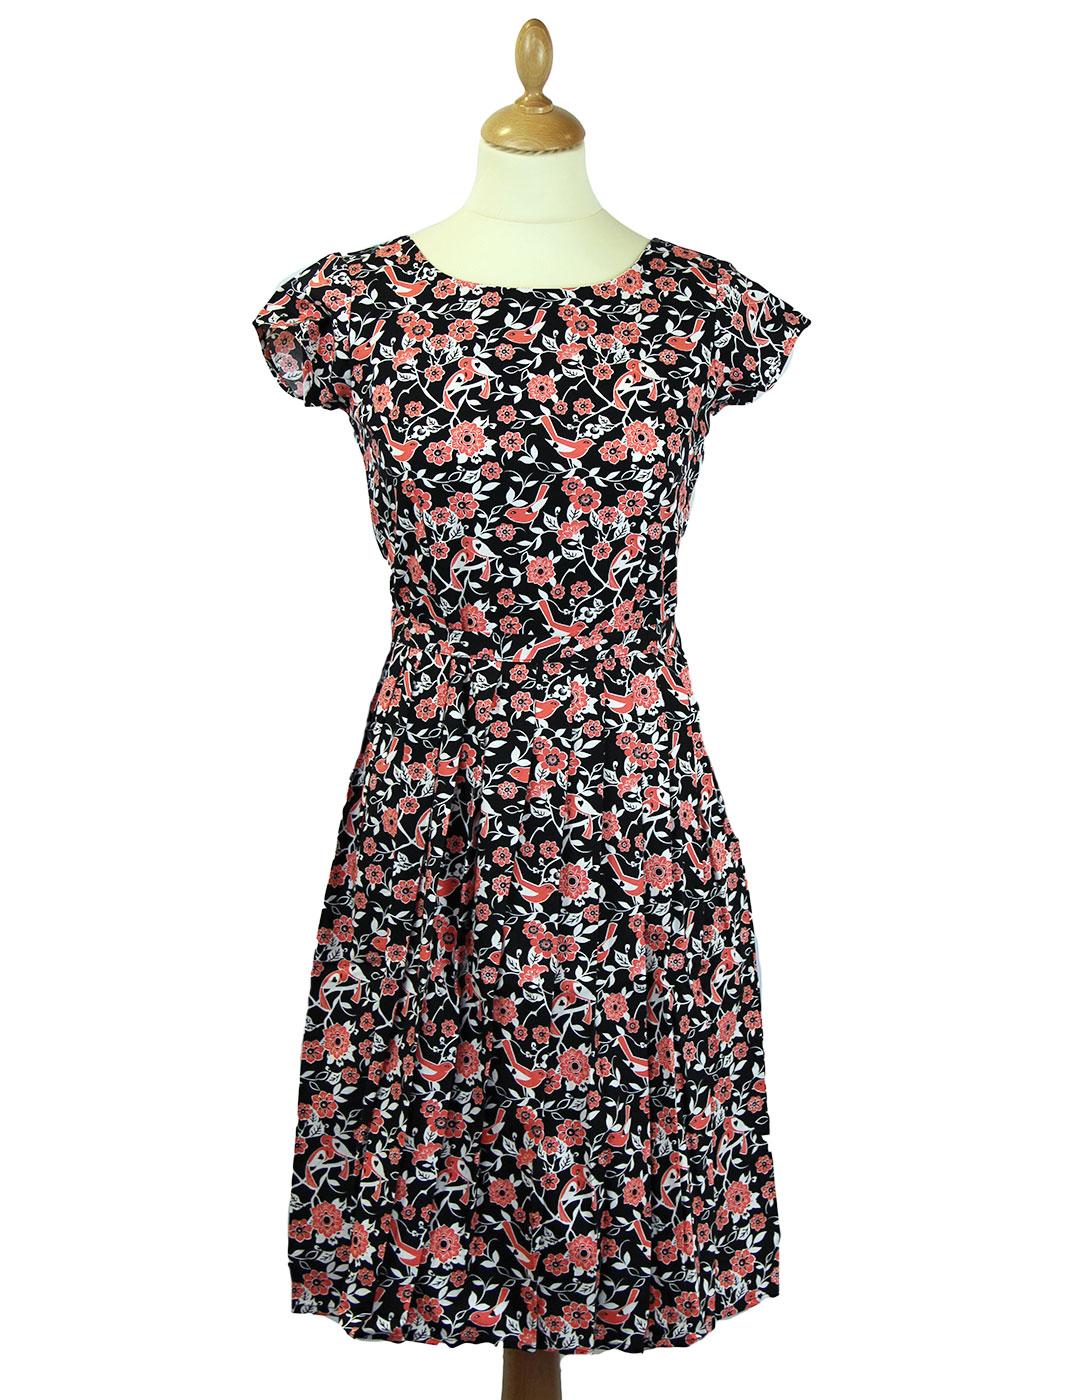 Love Birds Retro 1950s Vintage Summer Tea Dress